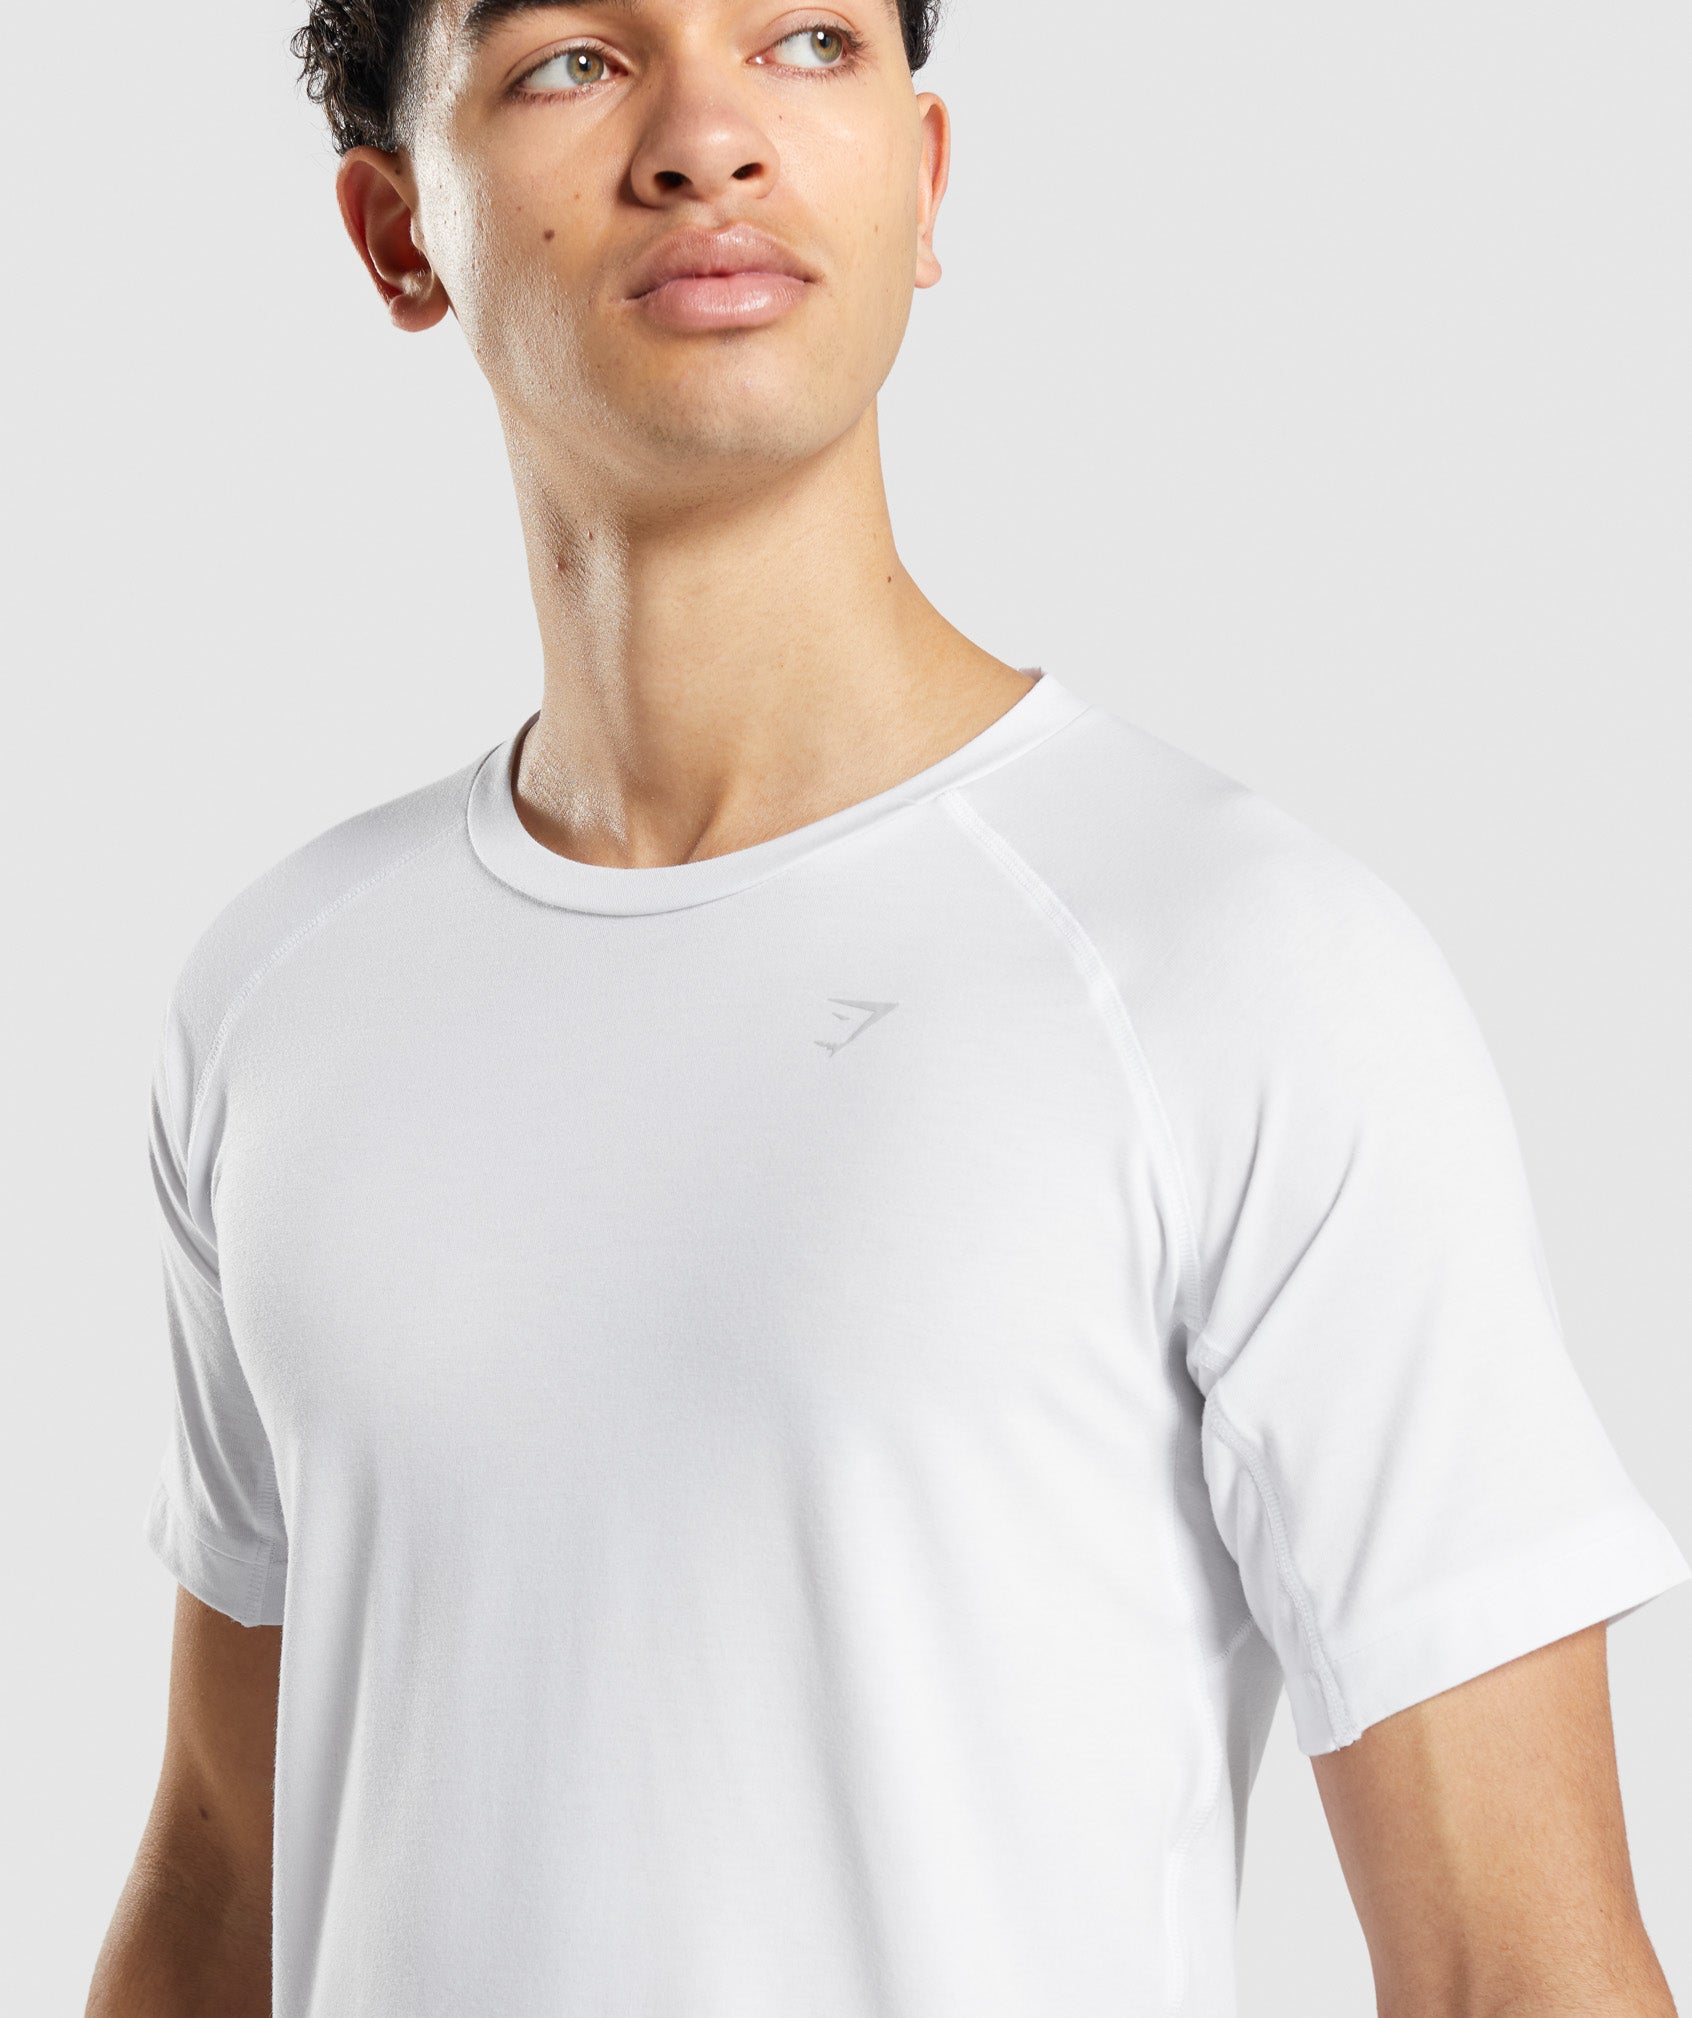 Studio Amplify T-Shirt in White